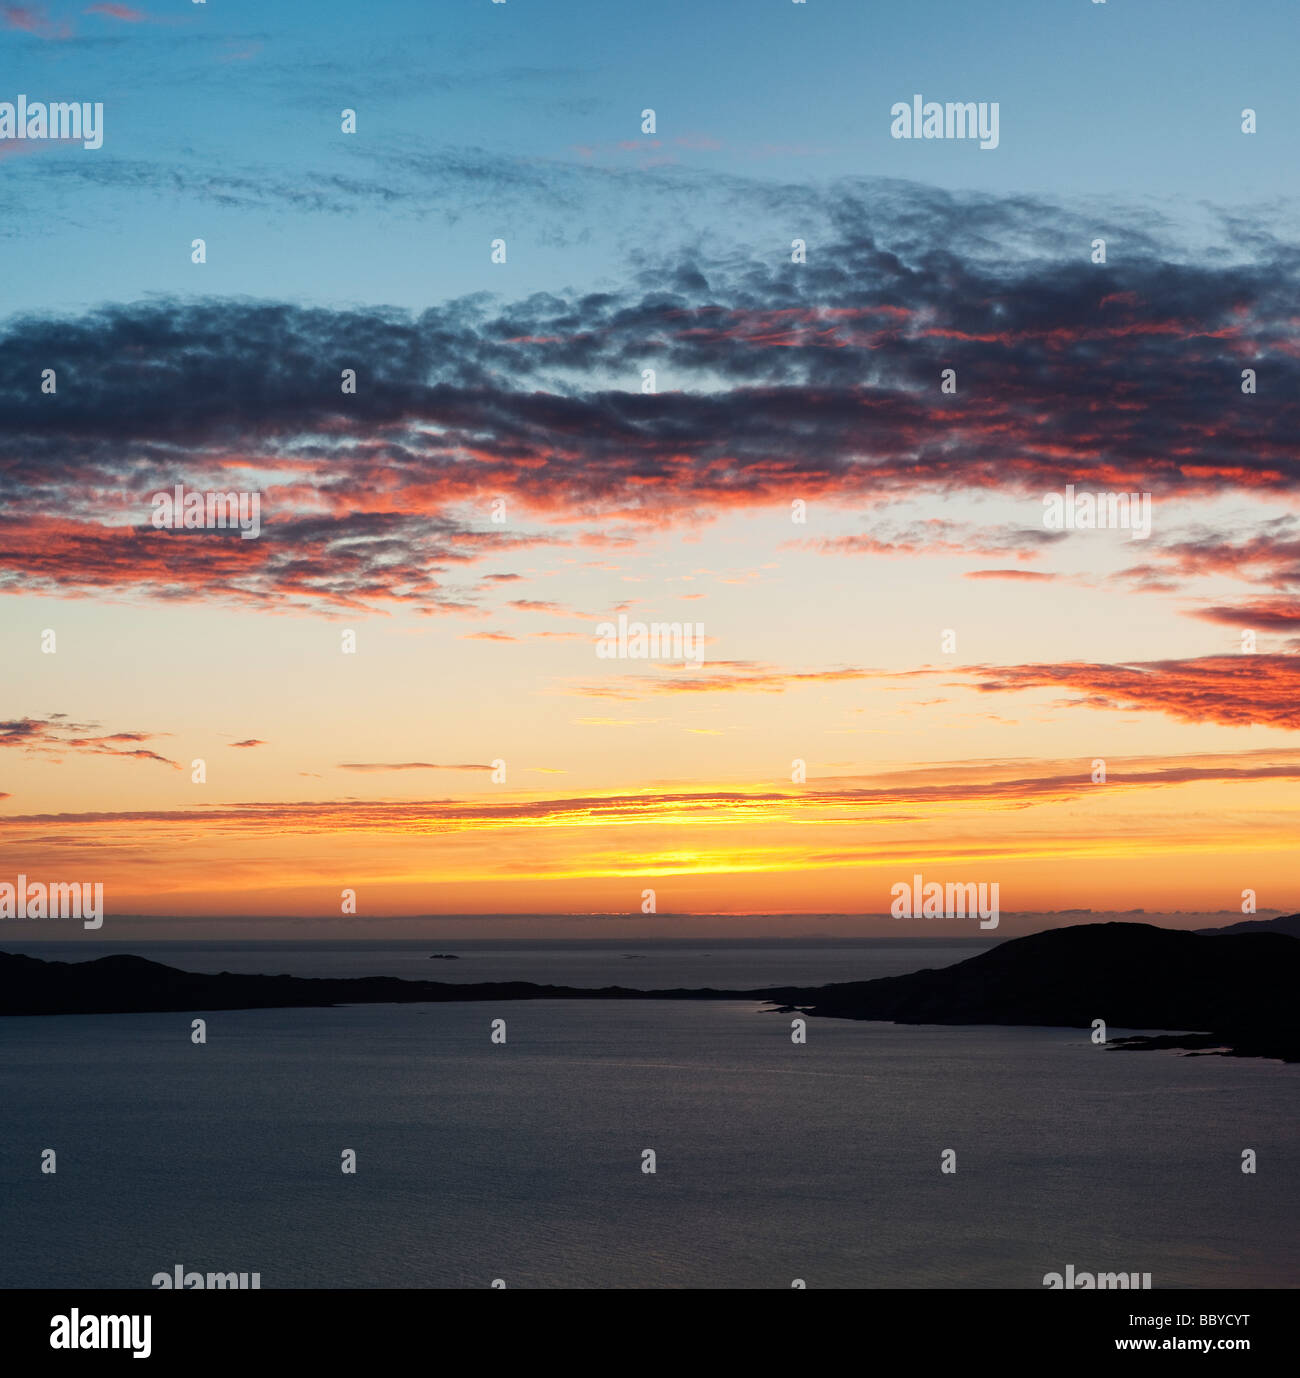 Sonnenuntergang über z. Island, Isle of Harris, äußeren Hebriden, Schottland Stockfoto